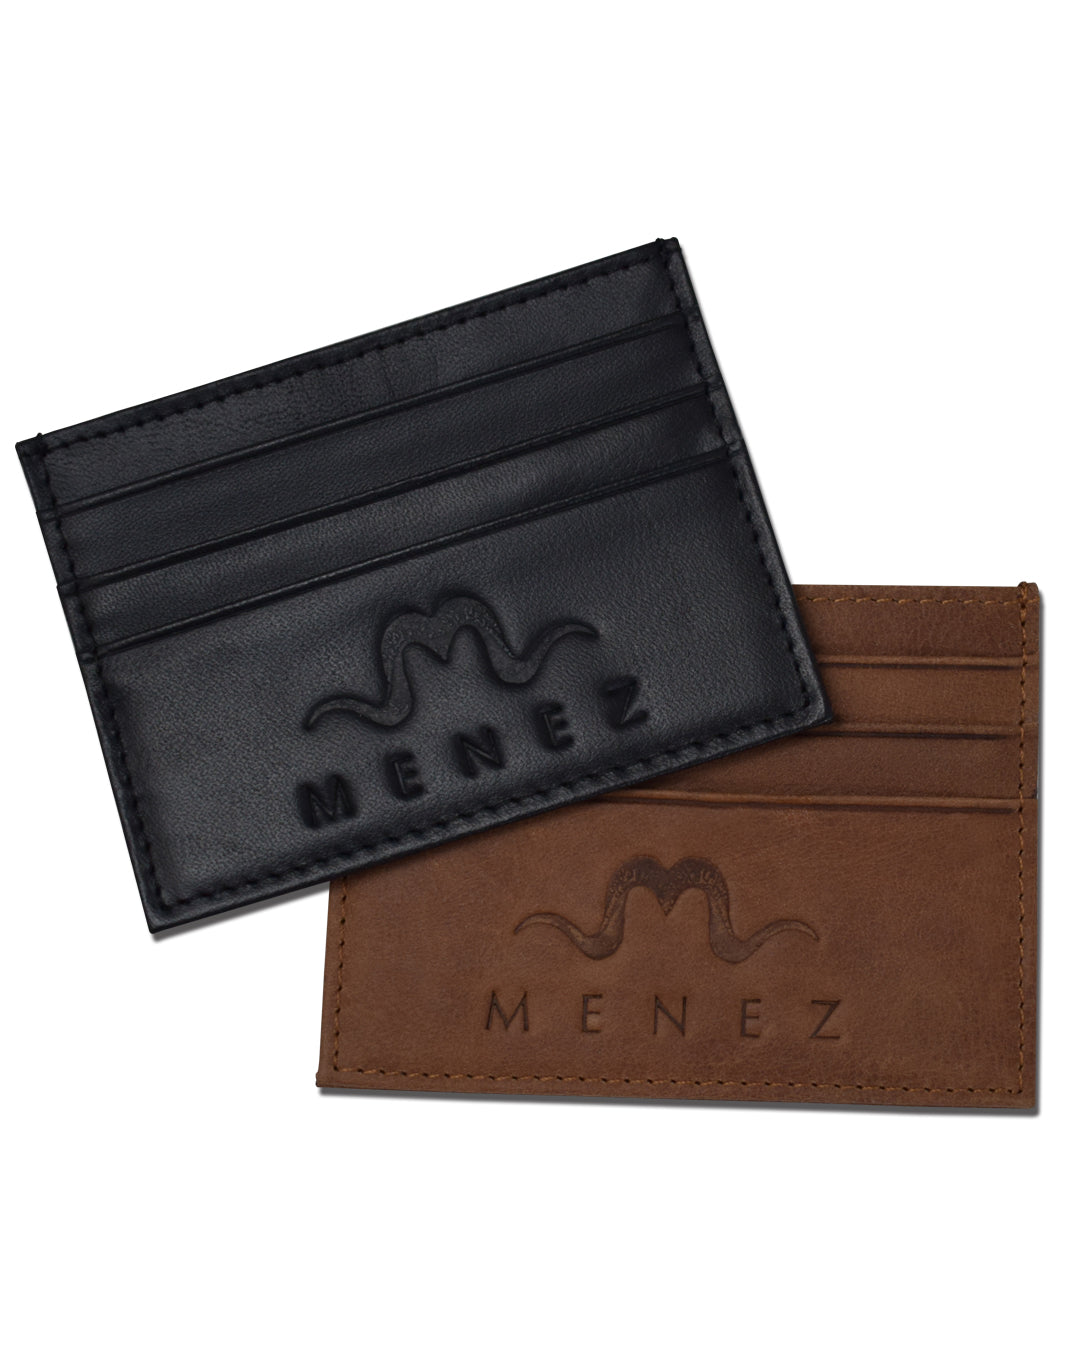 MENEZ™ BROWN LEATHER CARD HOLDER - MENEZ